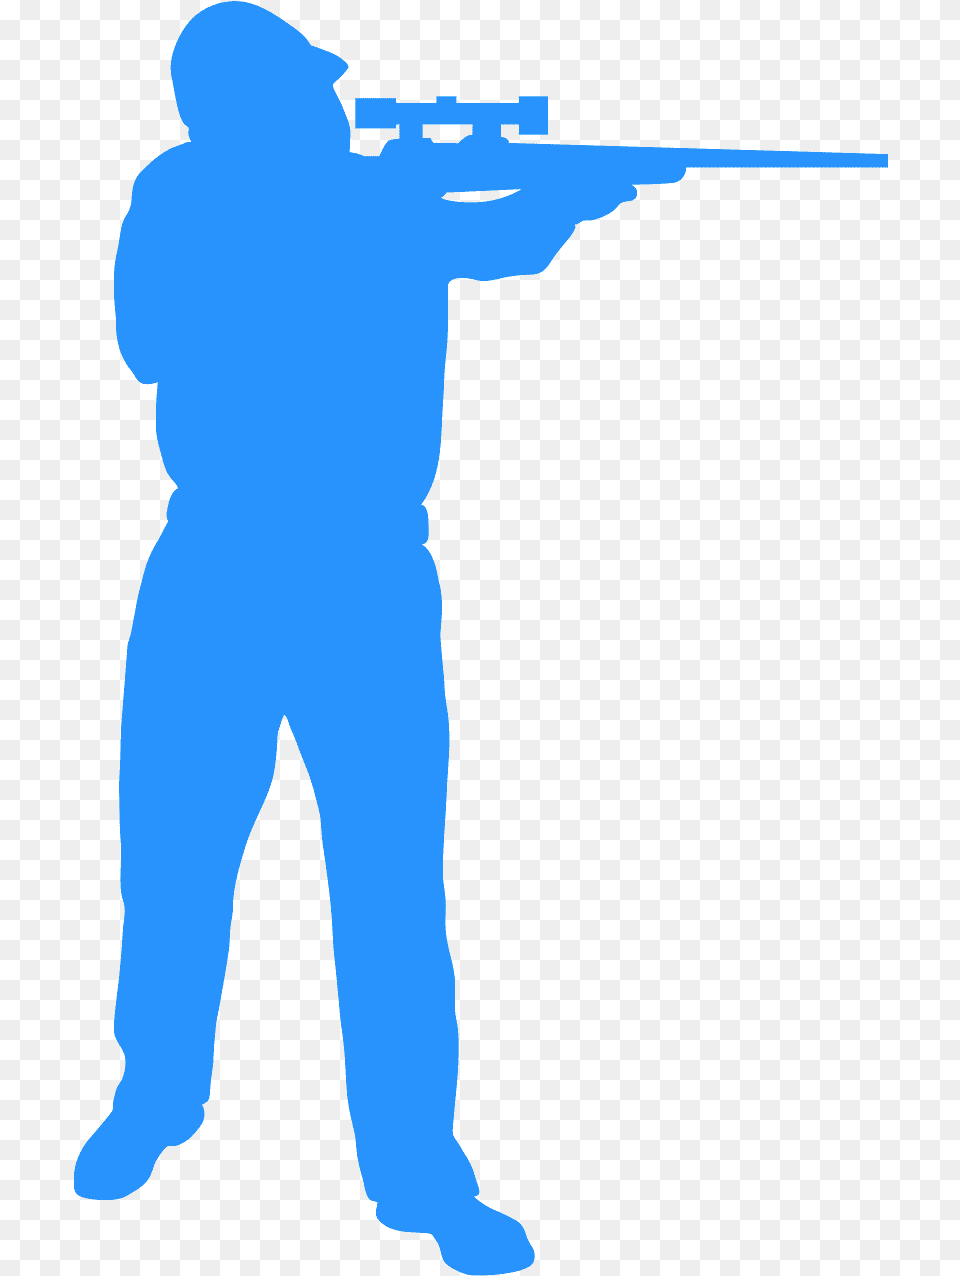 Silhouette Of Hunter Standing Up, Weapon, Rifle, Firearm, Gun Png